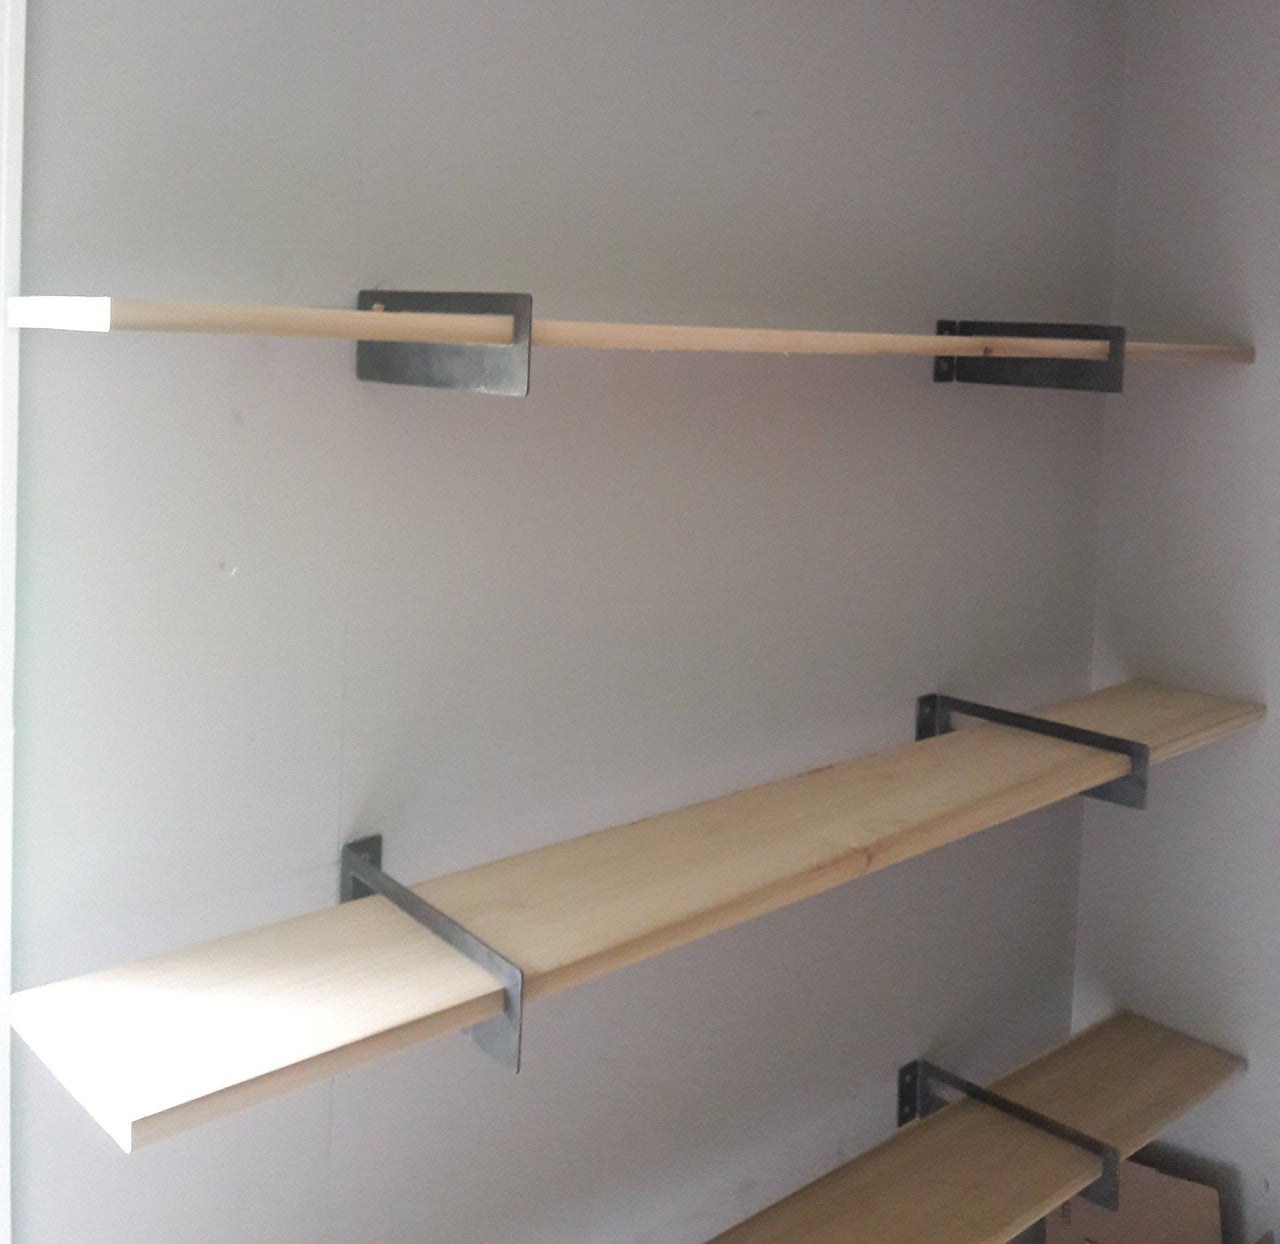 Standard Shelf Brackets (2 Piece Set)